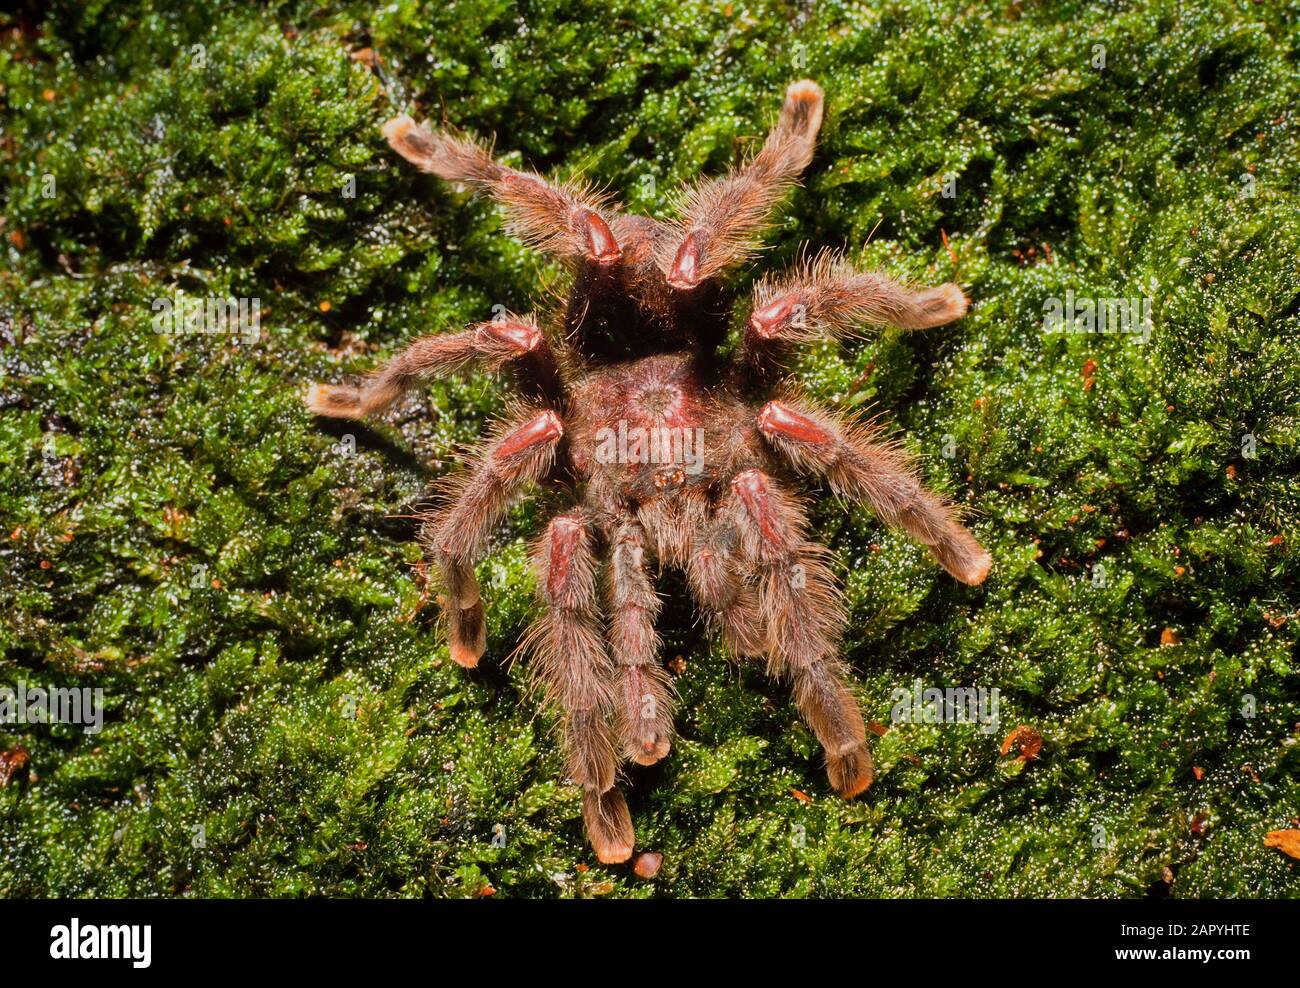 Tarantula spider, Aviculoria aviculaoria. On moss background. Dorsal view Stock Photo